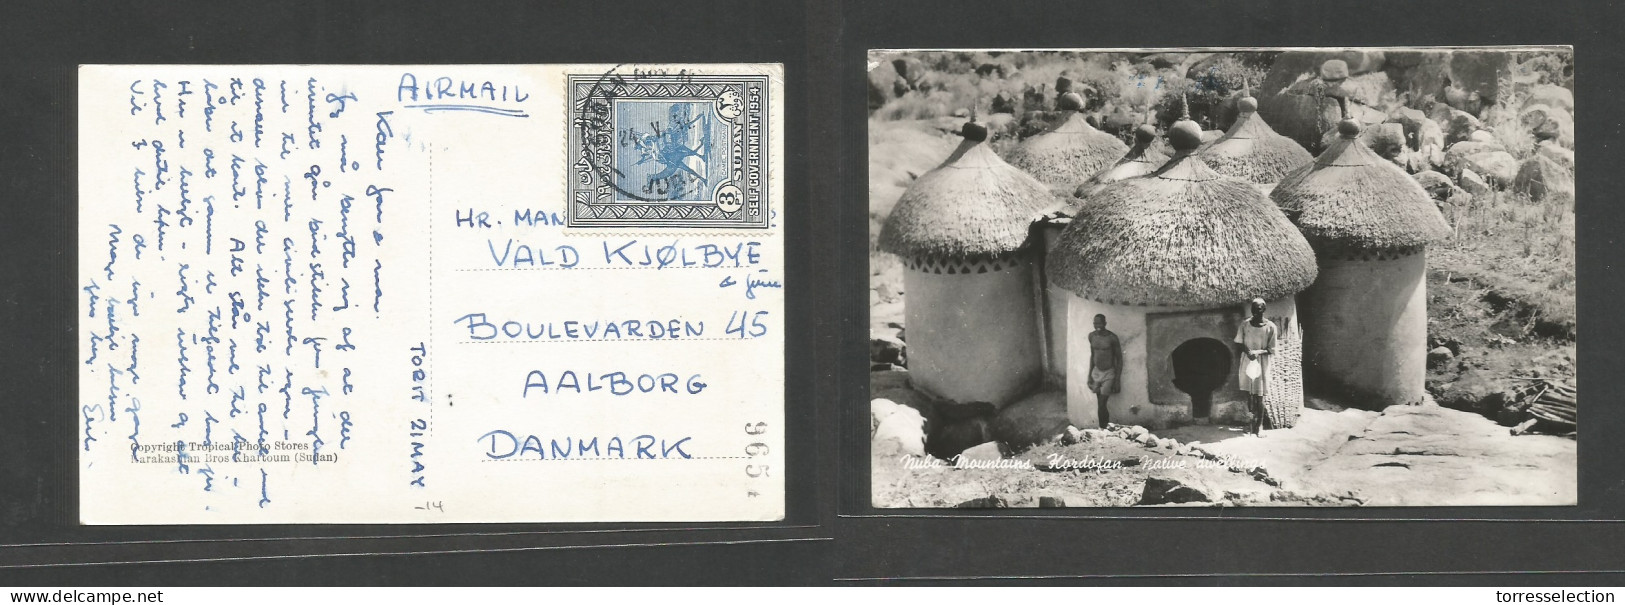 SUDAN. 1954 (21 May) Juba - Denmark, Aalborg. Air Single Fkd Photo Ppc. Fine. - Soedan (1954-...)